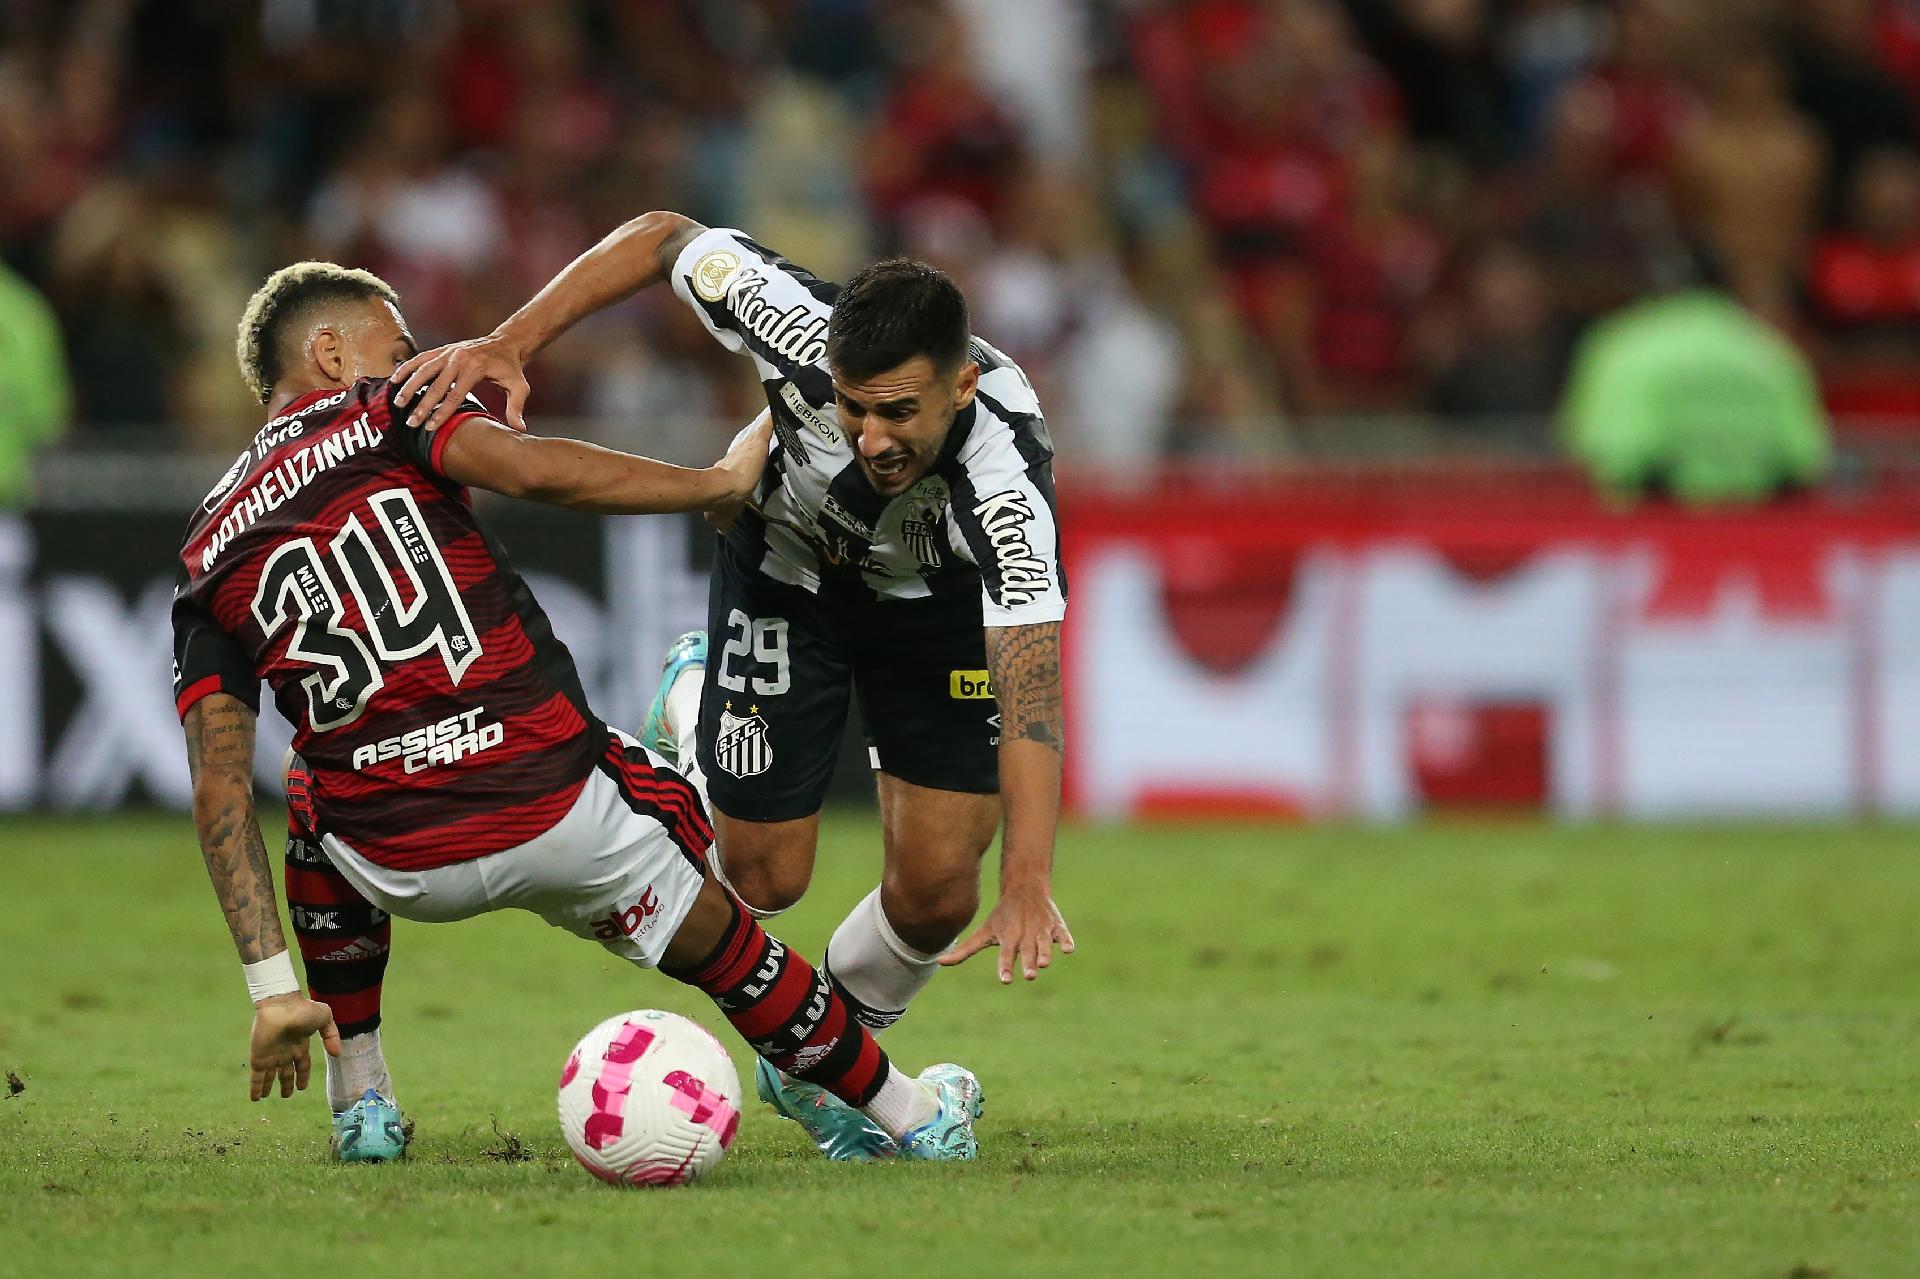 Habemus futebol - Santos 0 x 1 Flamengo